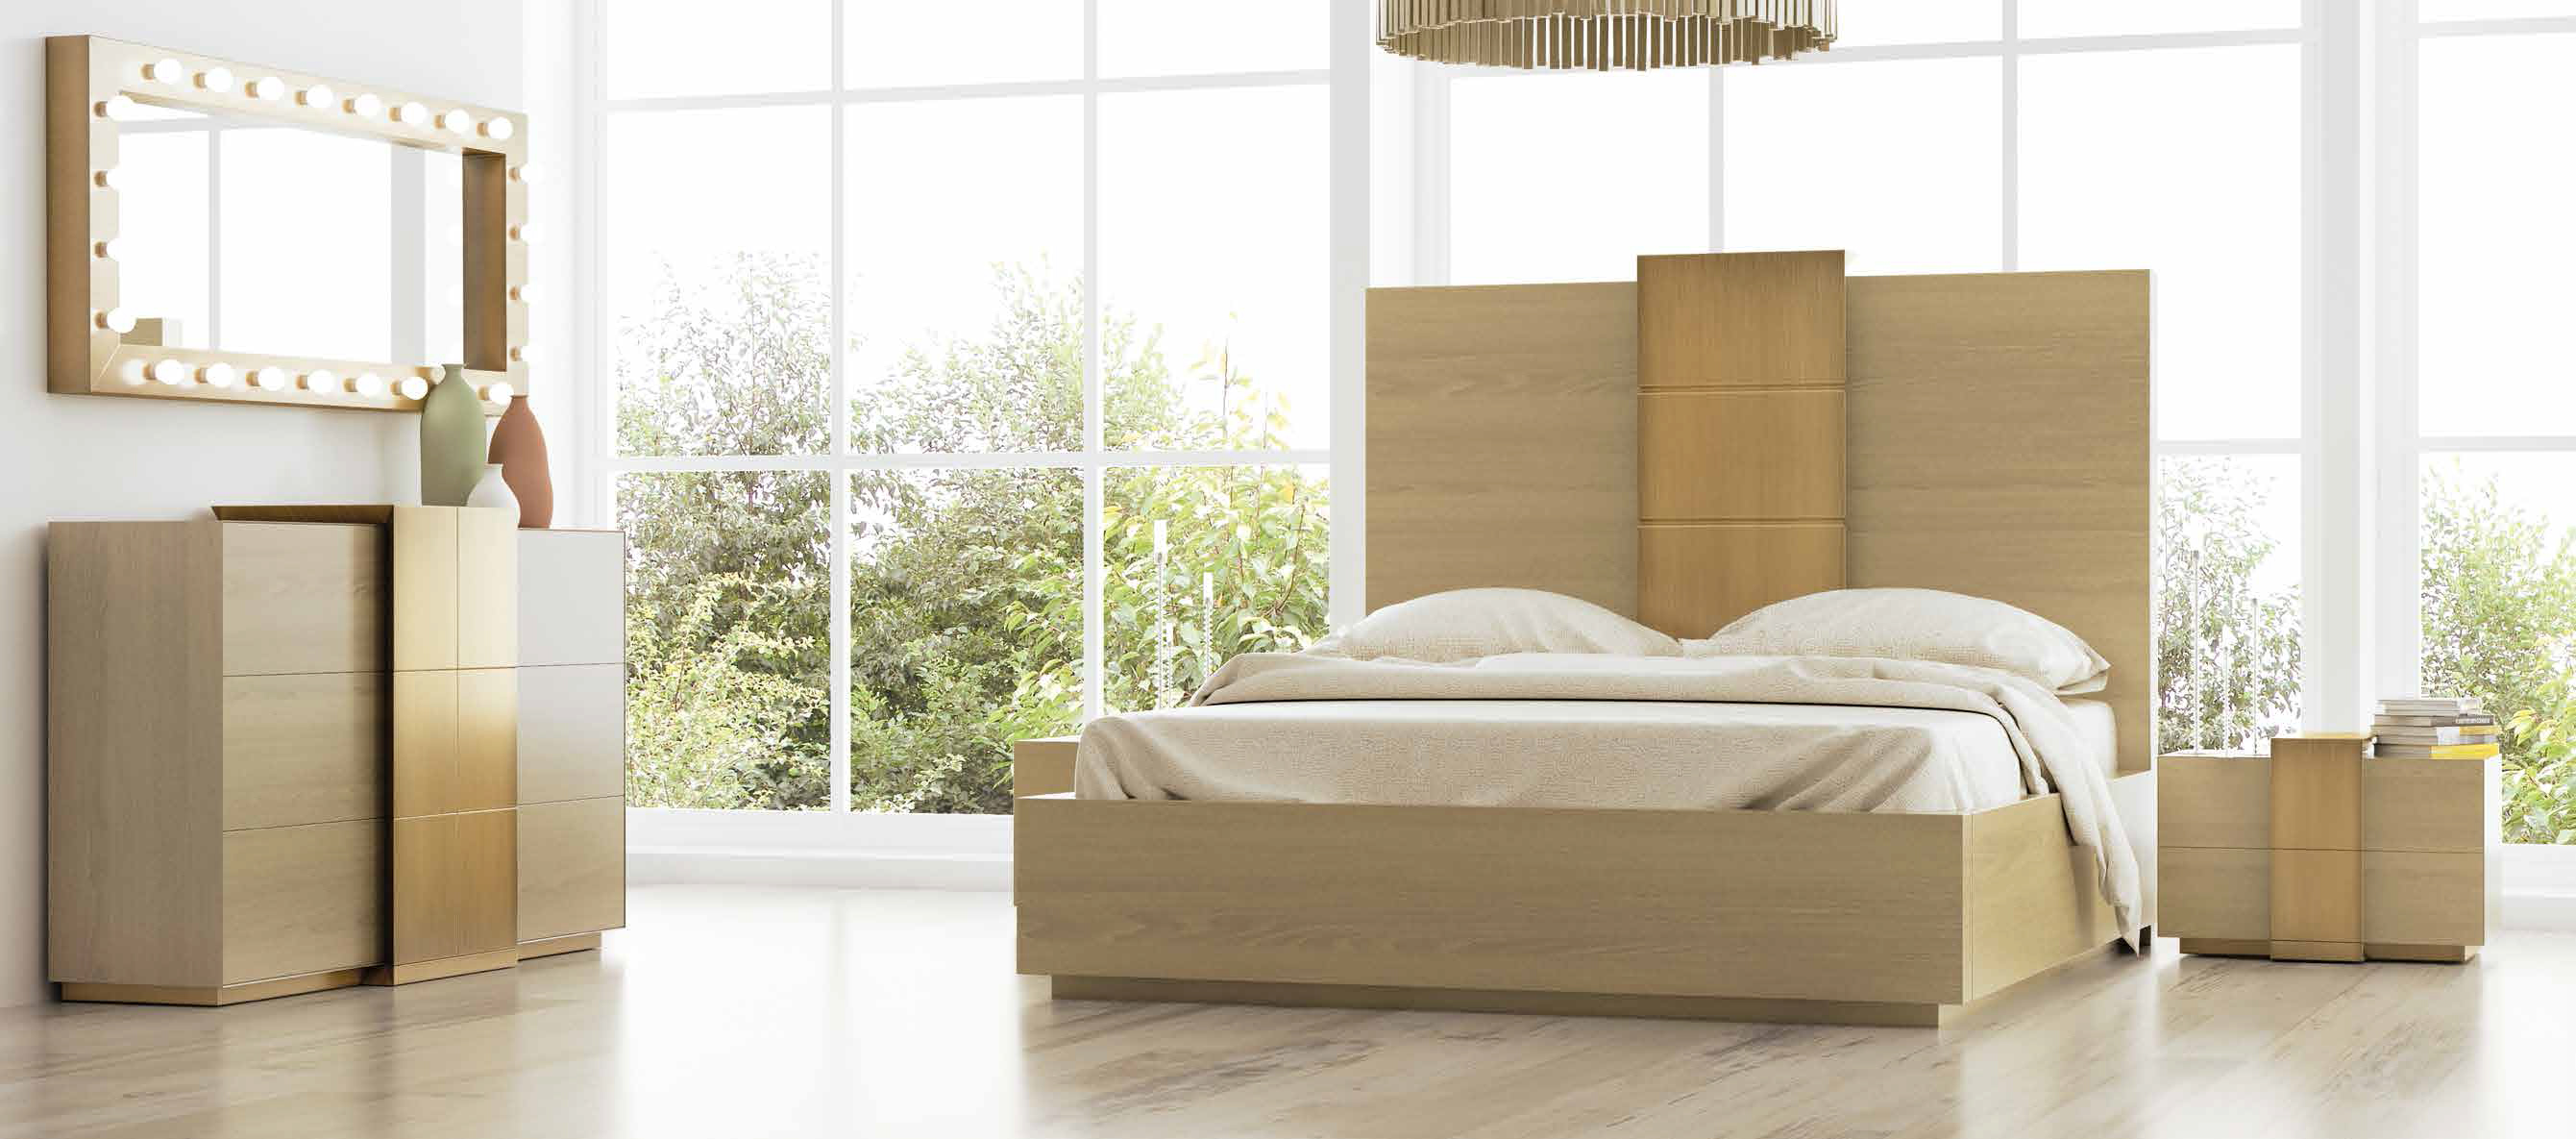 Brands Franco Furniture Bedrooms vol3, Spain DOR 10